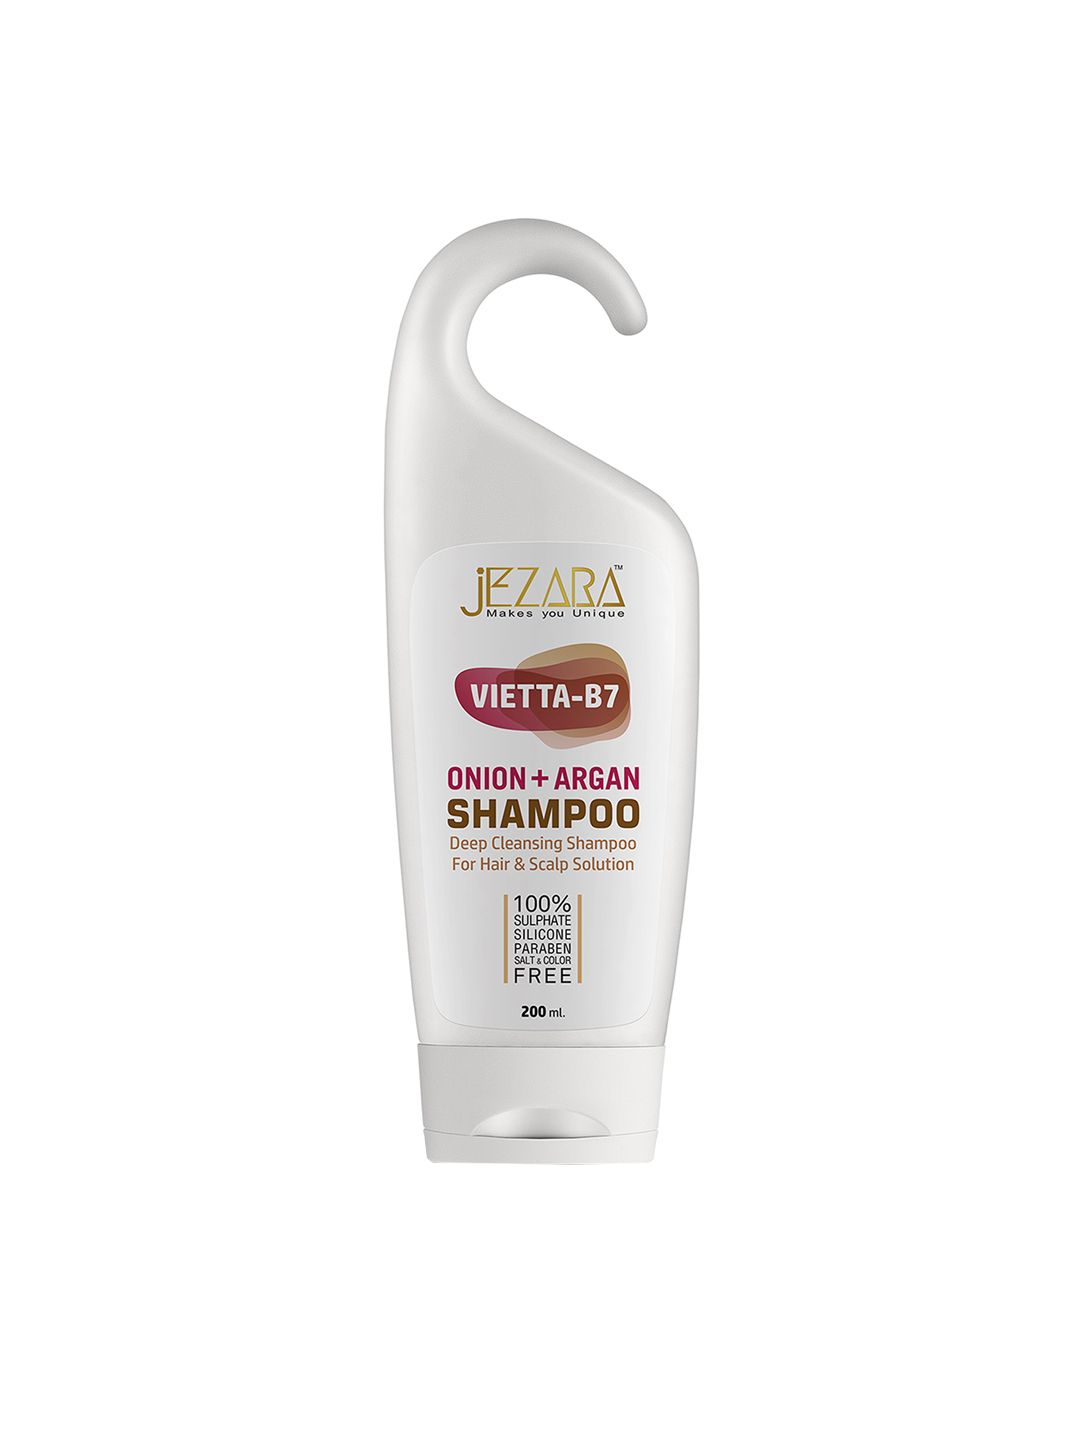 JEZARA  Vietta-B7 Onion+ Argon shampoo 200ml Price in India